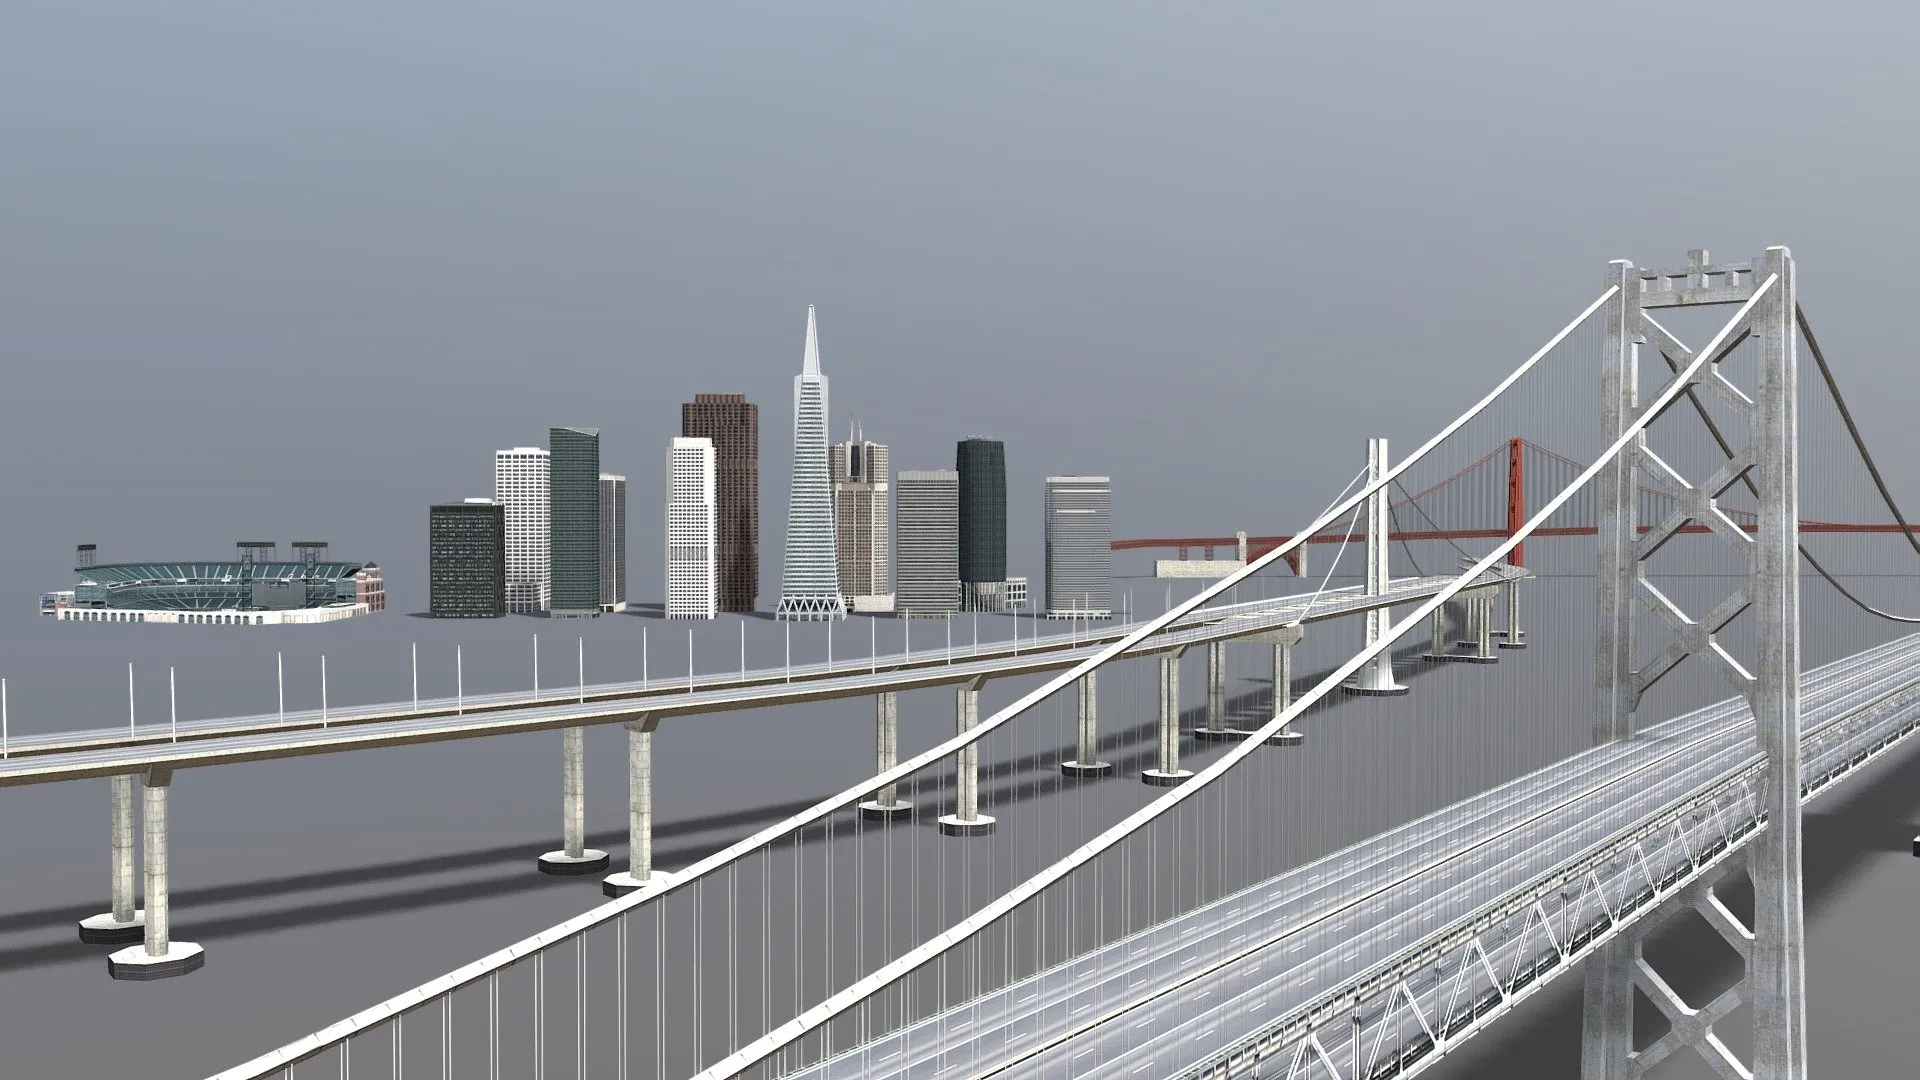 PBR Game 3D Model – San Francisco Landmarks